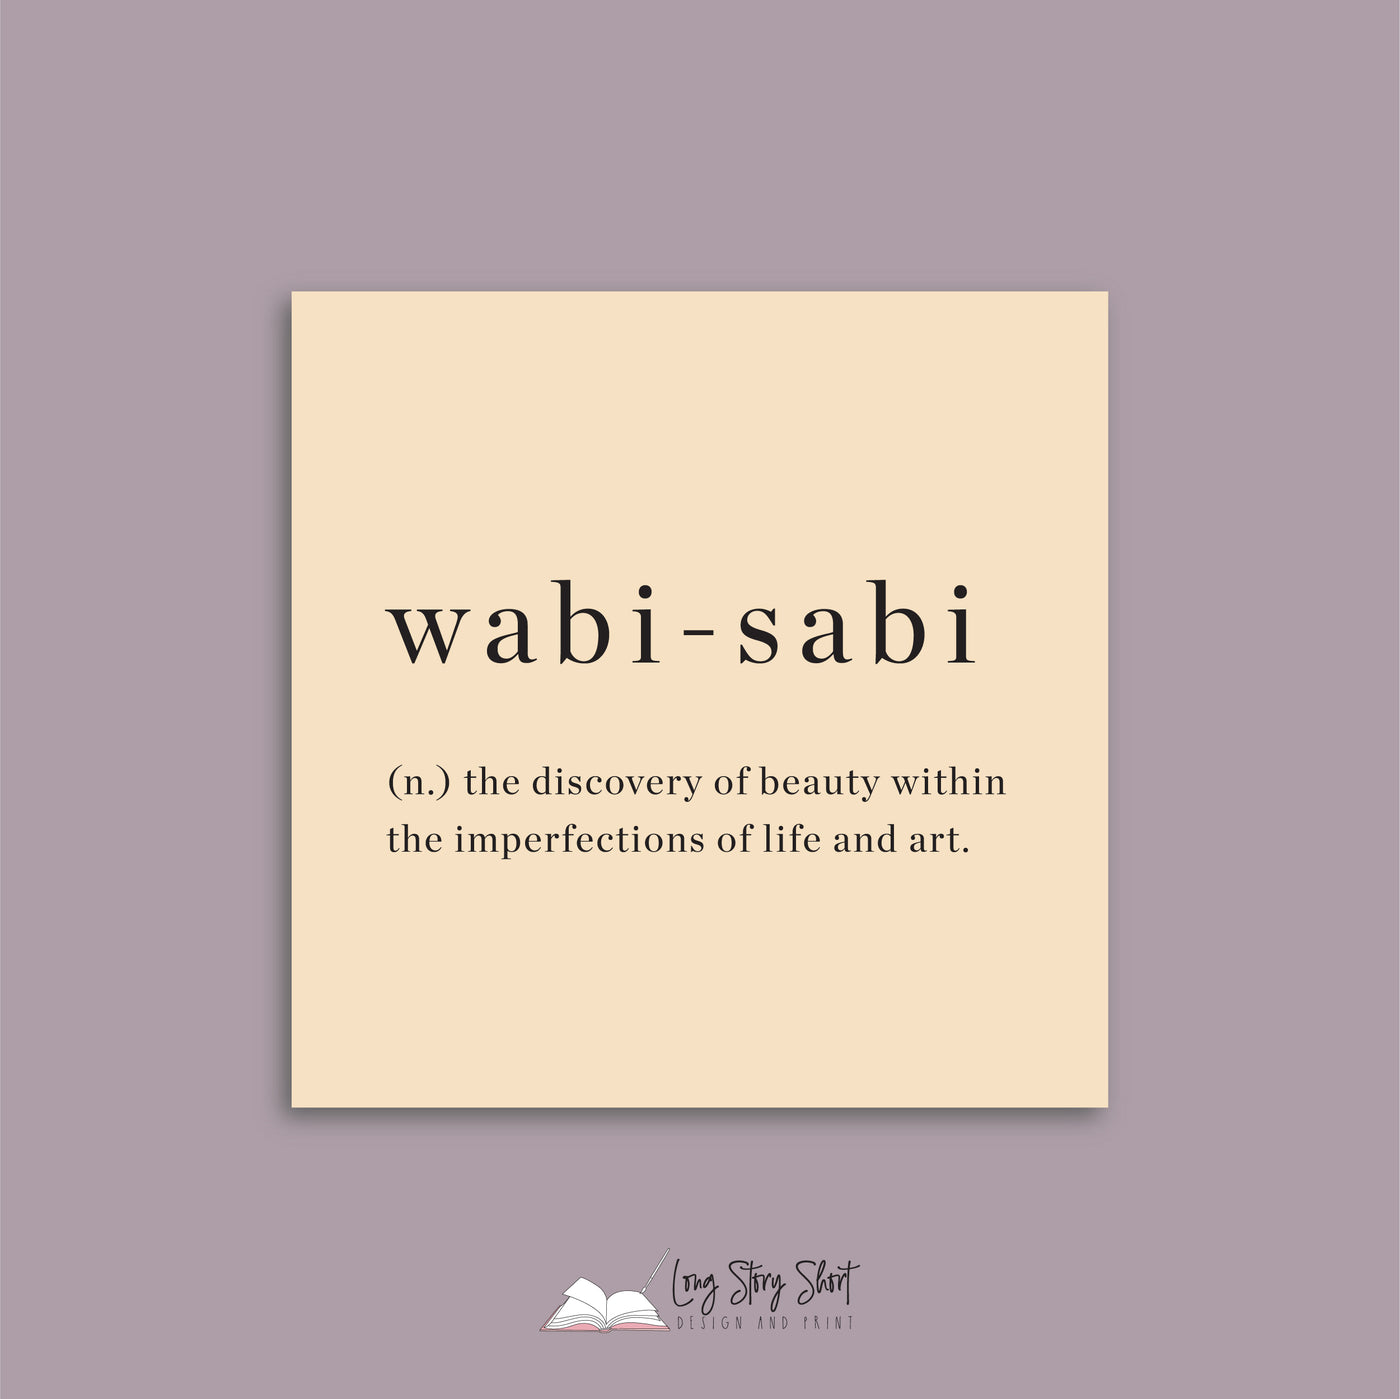 Wabi-sabi Definition Vinyl Label Pack